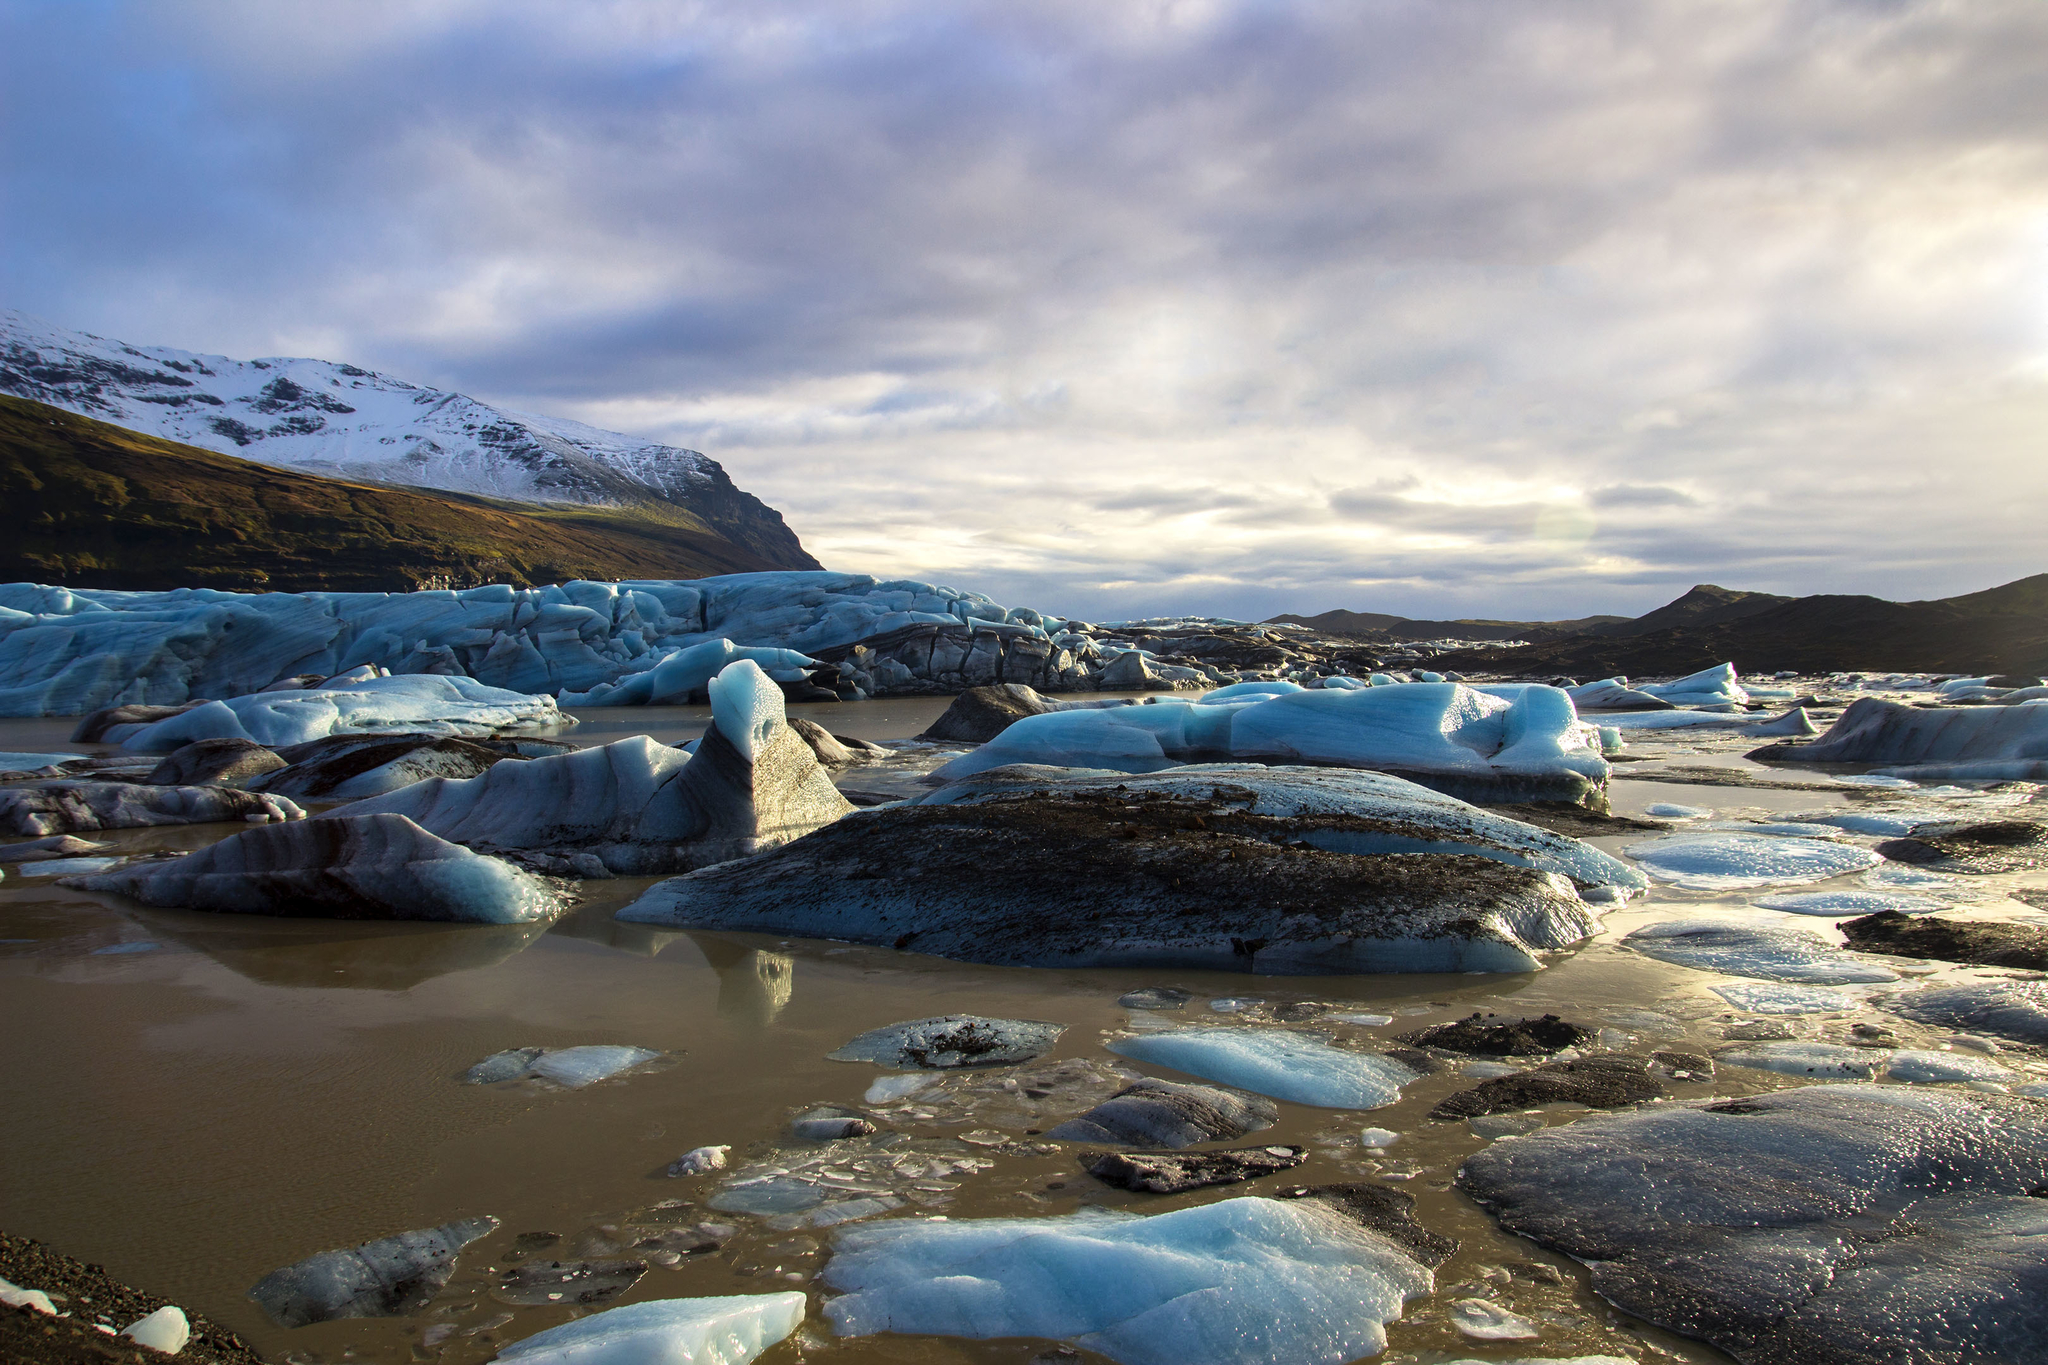 L'un des glaciers de Vatnajökull : Svínafellsjökull